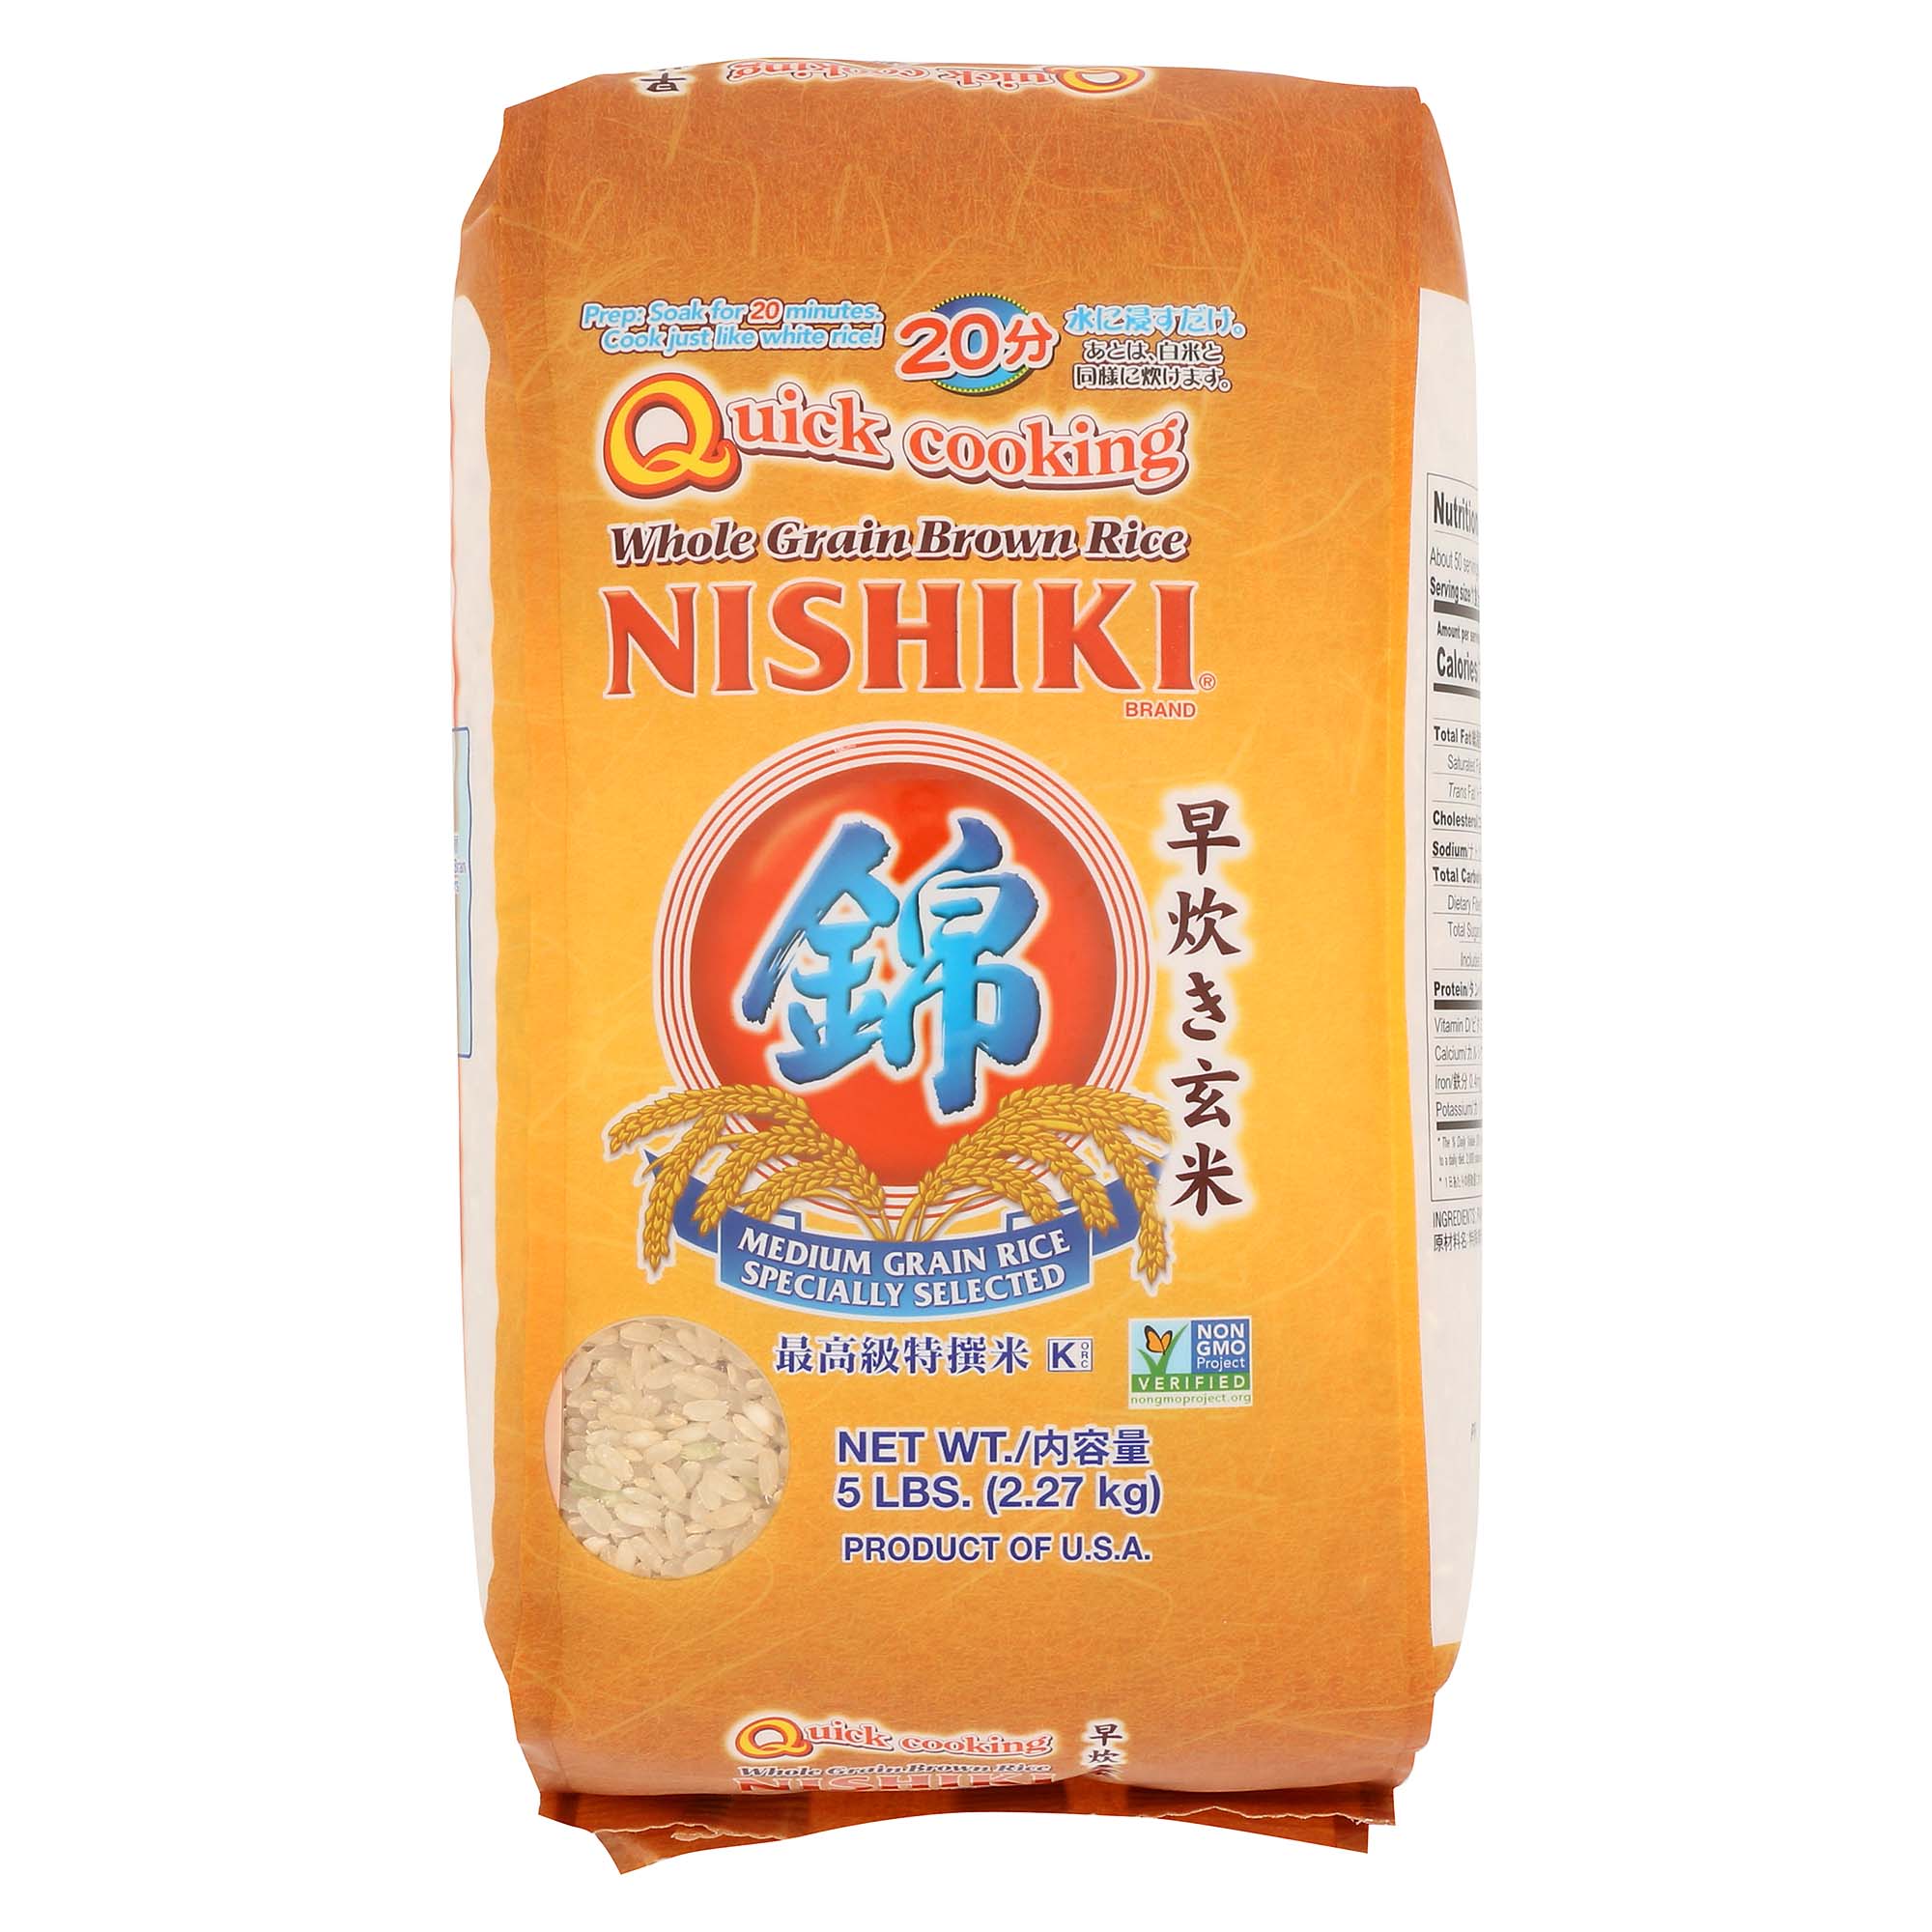 NISHIKI QUICK COOKING BROWN RICE 8/5.0 #